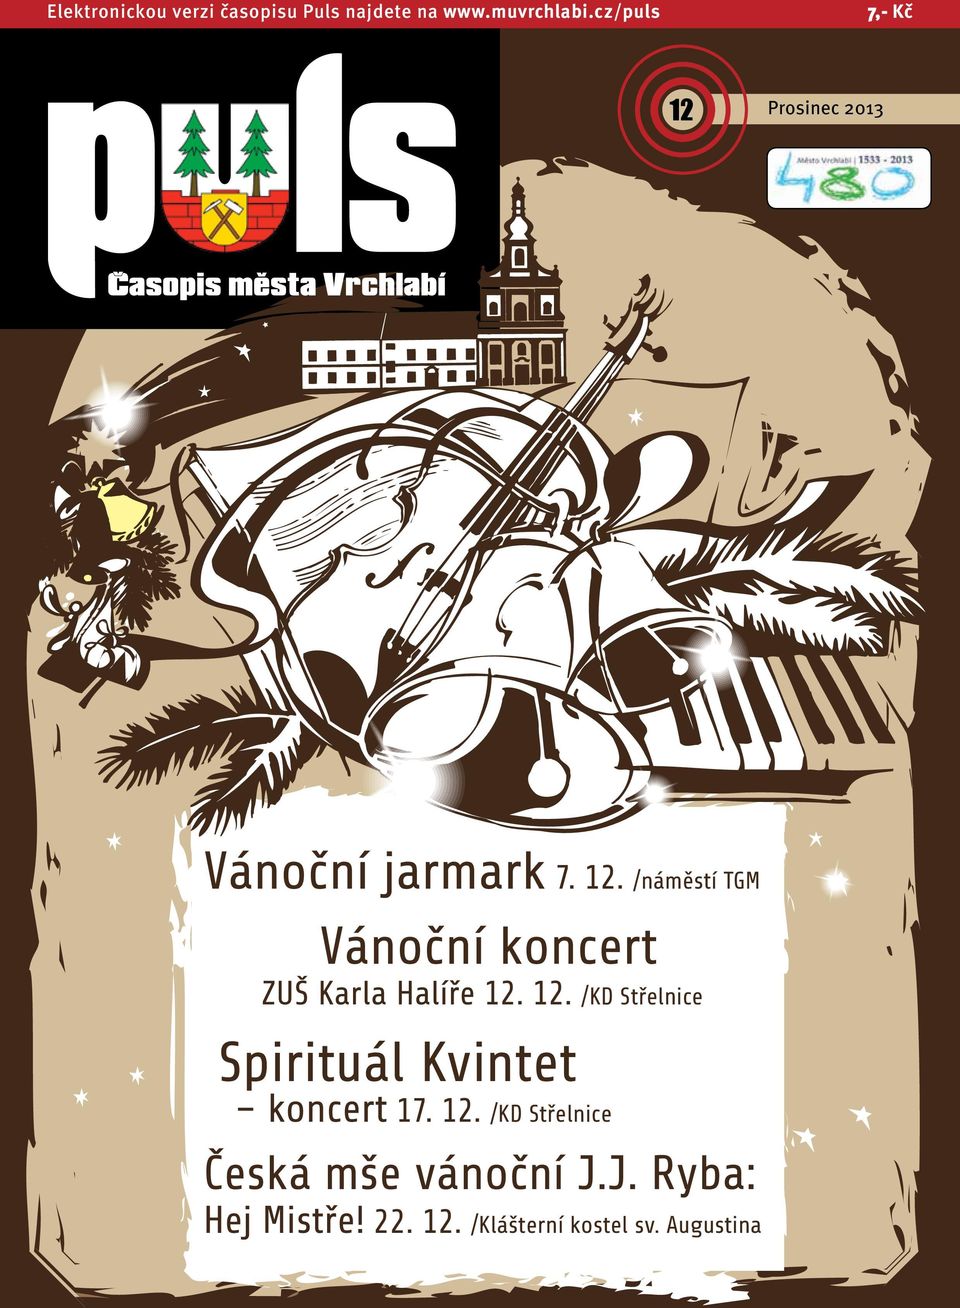 12. /KD Střelnice Spirituál Kvintet koncert 17. 12.